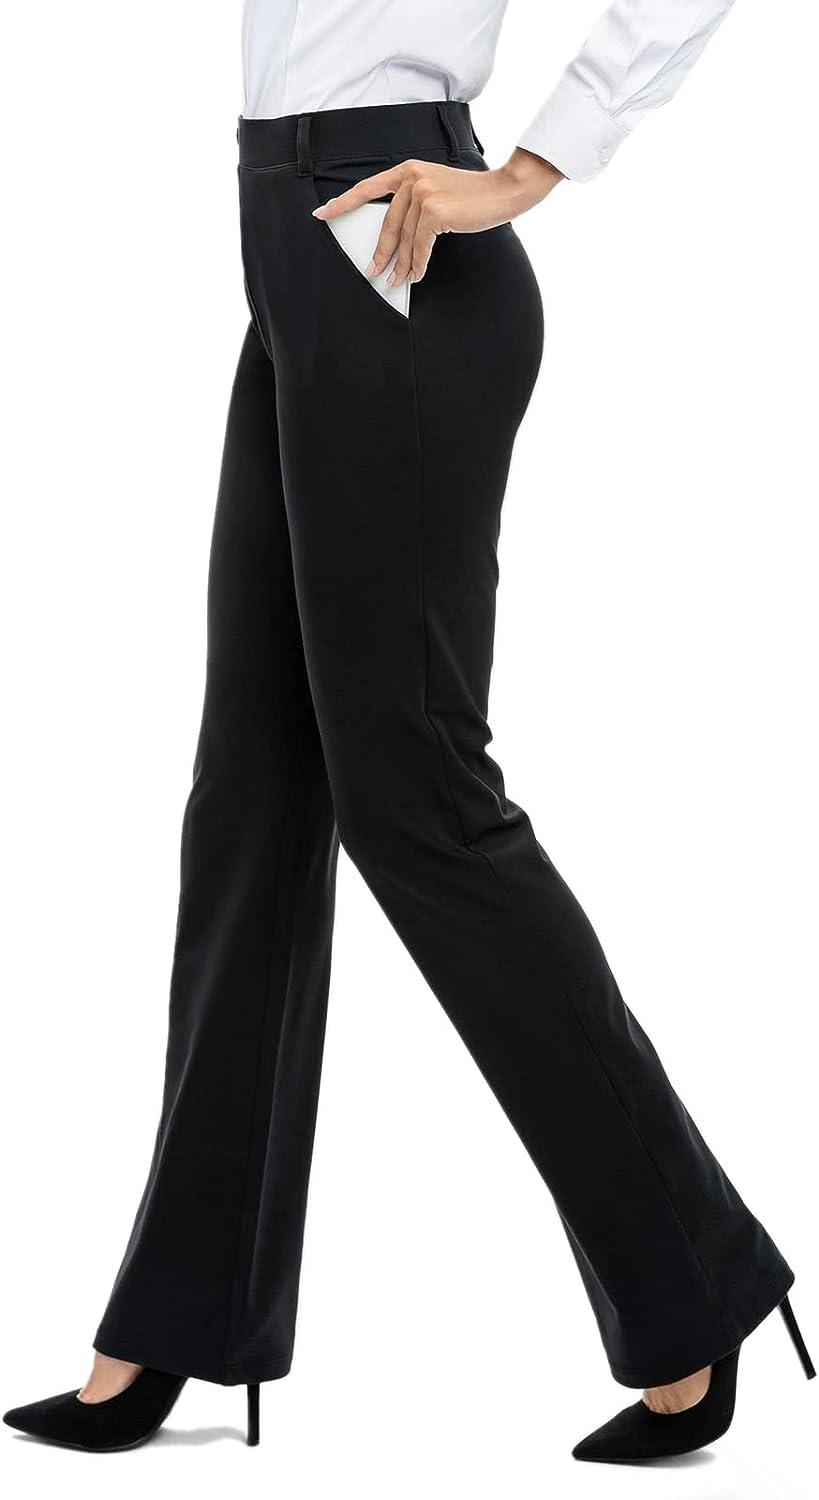  5 Pockets,Tall Womens Straight Leg Yoga Pants Stretch Work  Dress Pants Slim Fit,35,Black,Size M